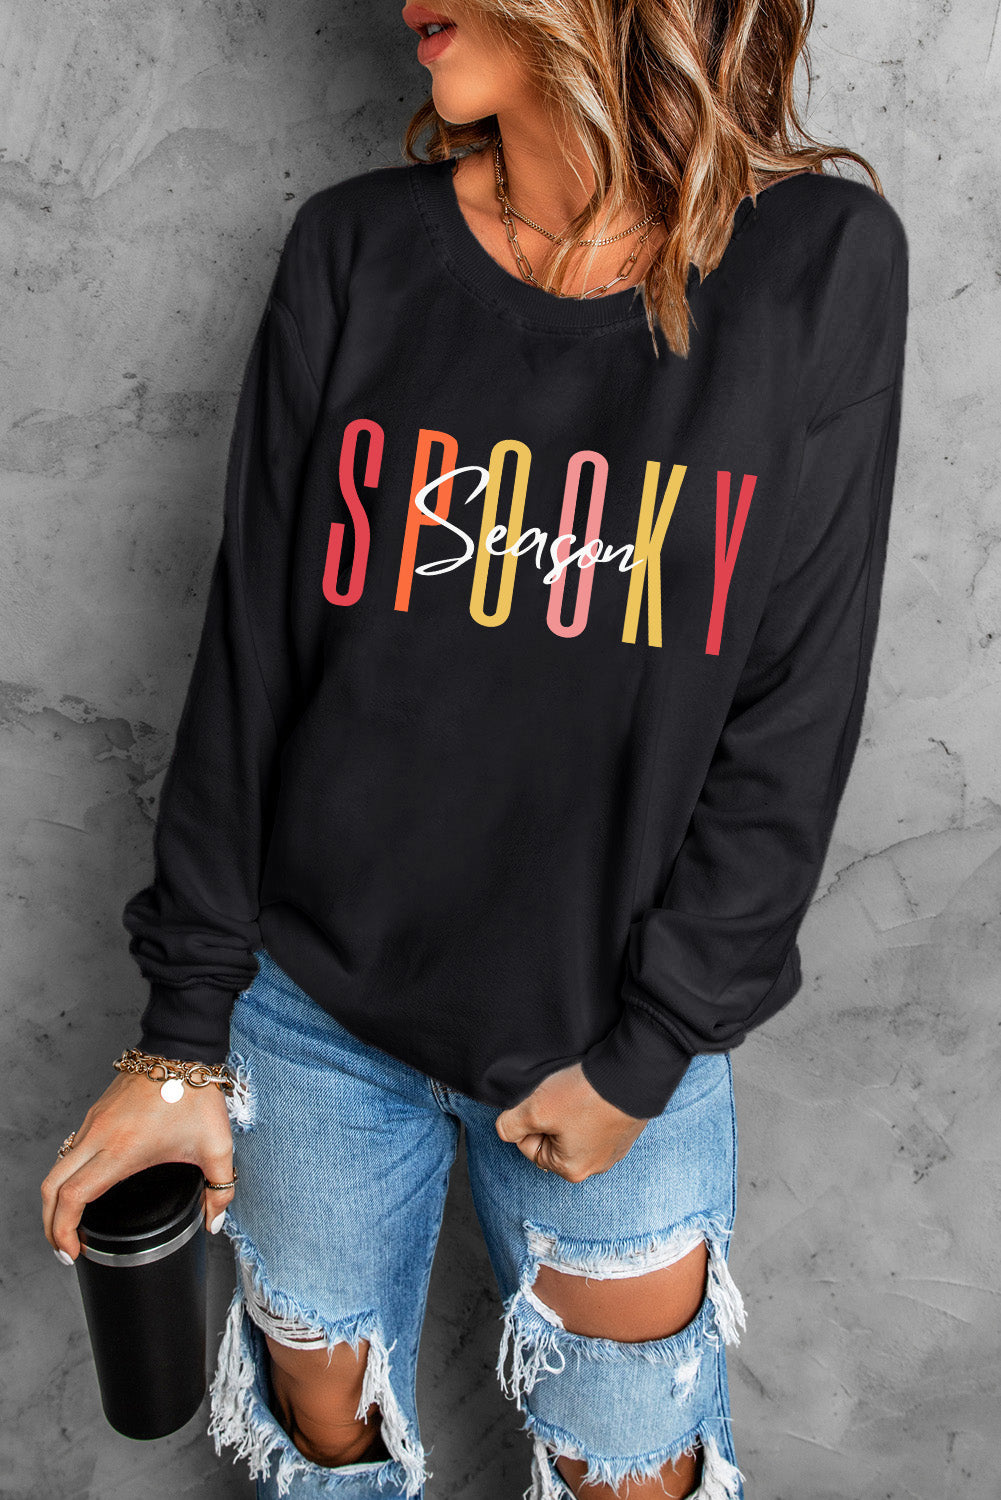 - Spooky Season Halloween Fashion Graphic Sweatshirt - womens sweatshirt at TFC&H Co.